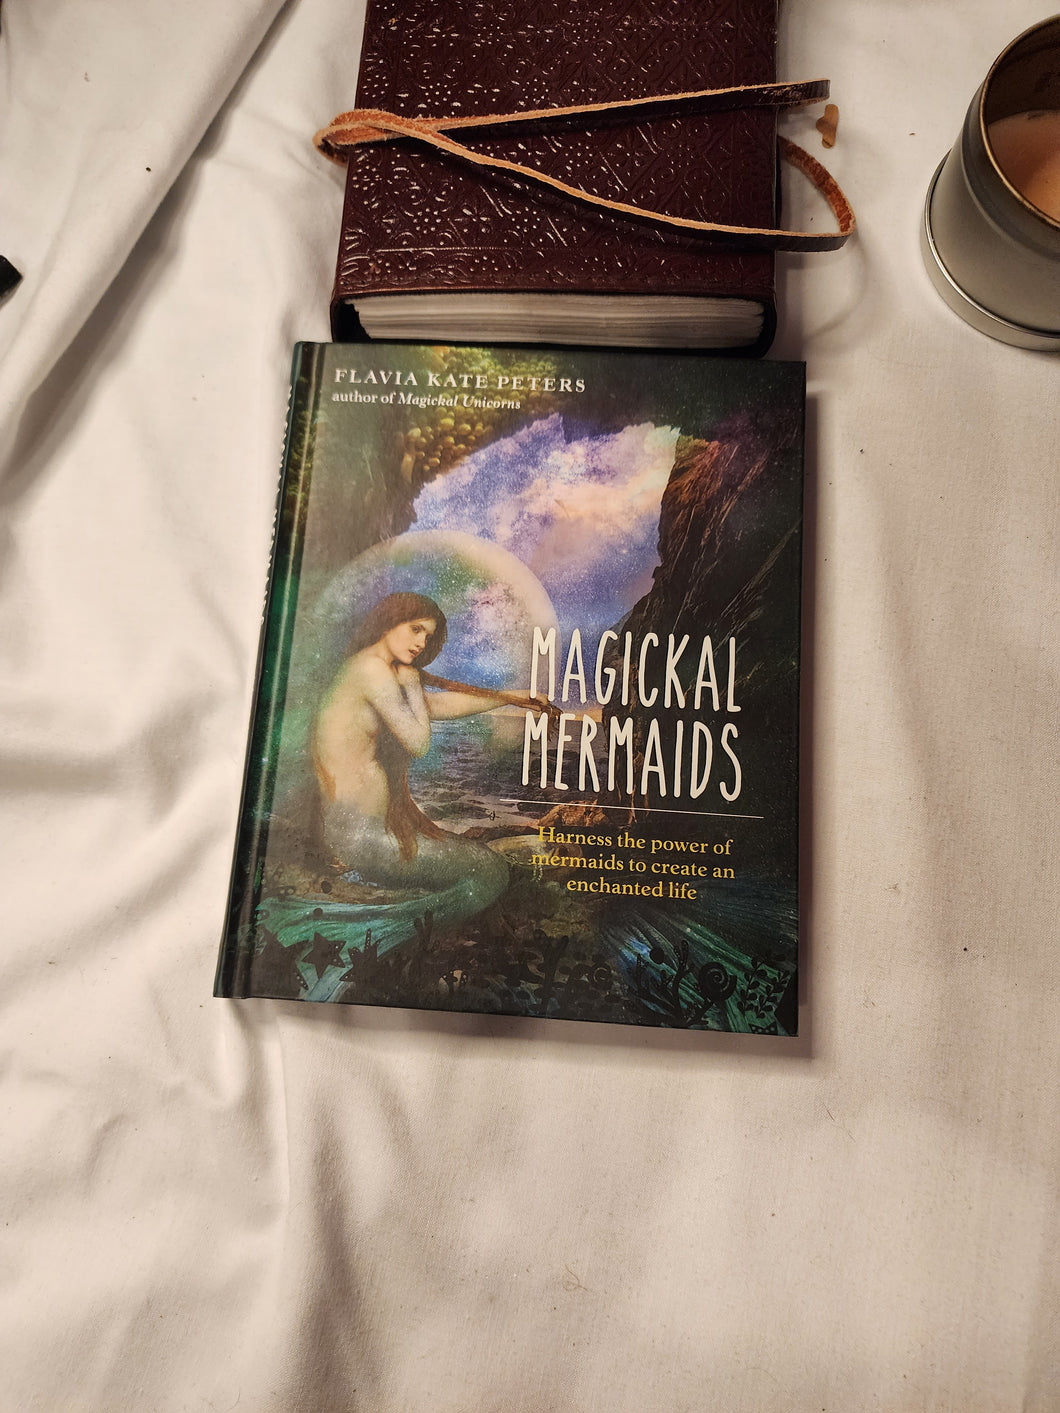 Magickal Mermaids by Flavia Kate Peters